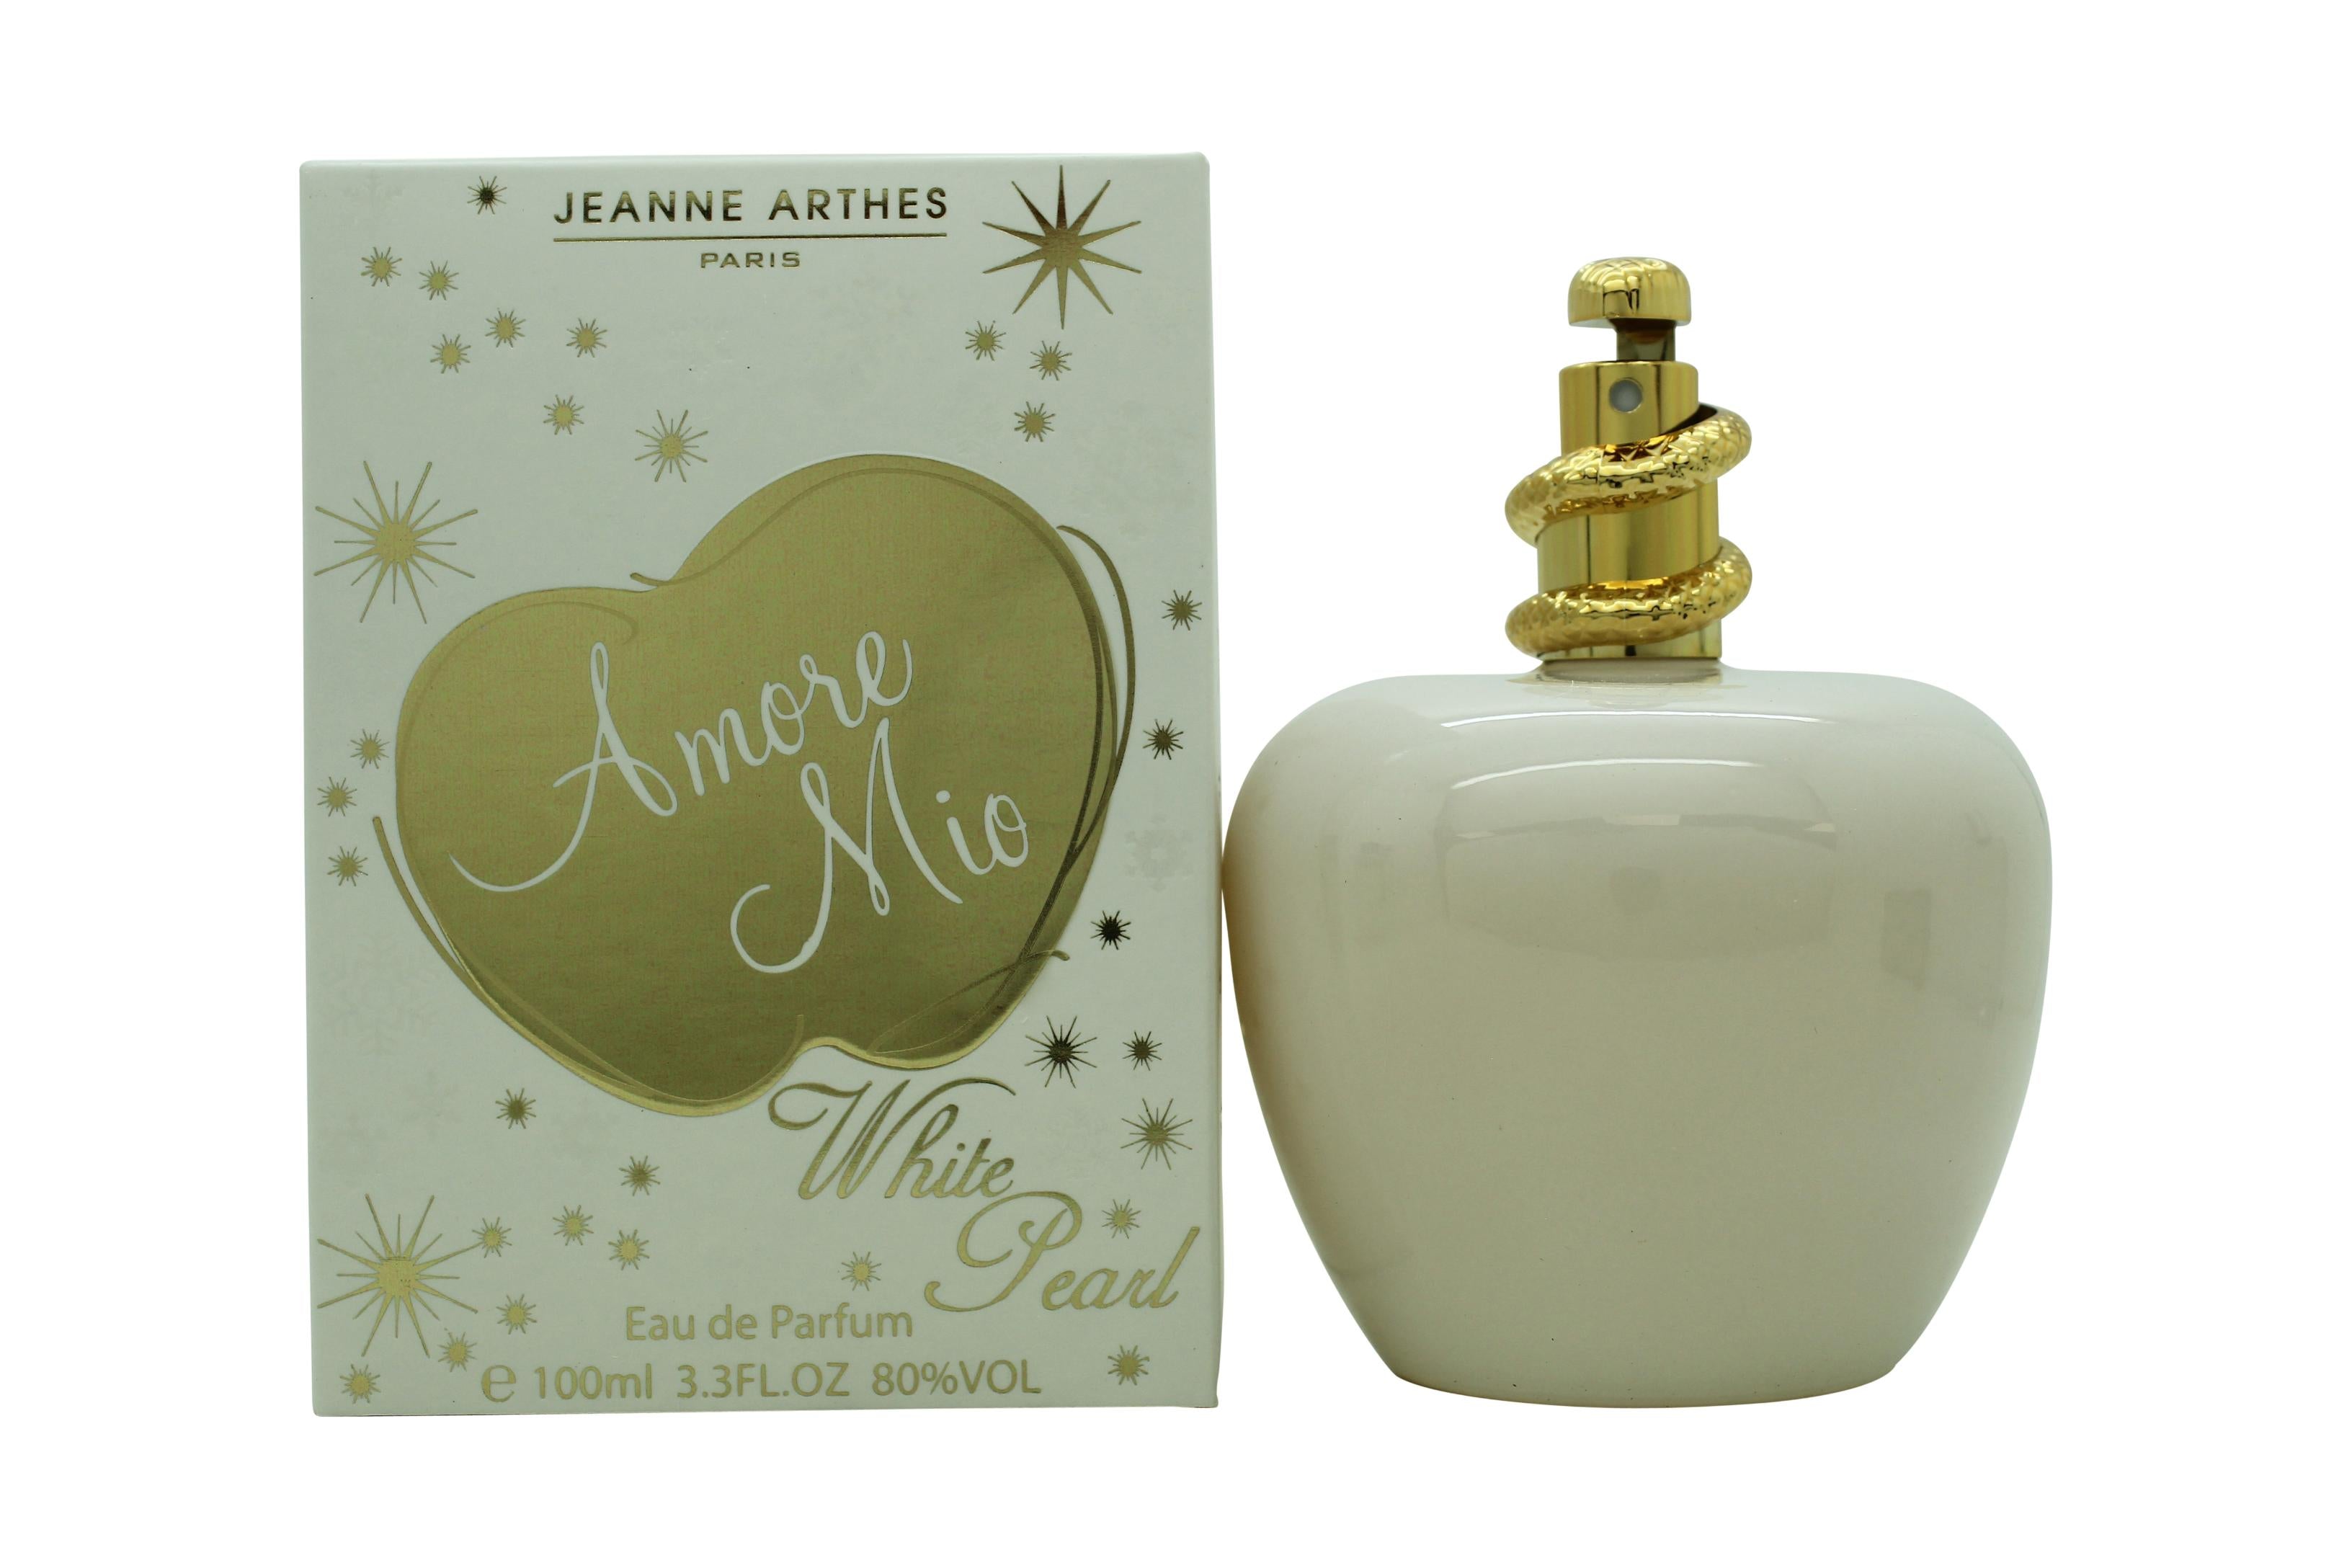 View Jeanne Arthes Amore Mio White Pearl Eau de Parfum 100ml Spray information